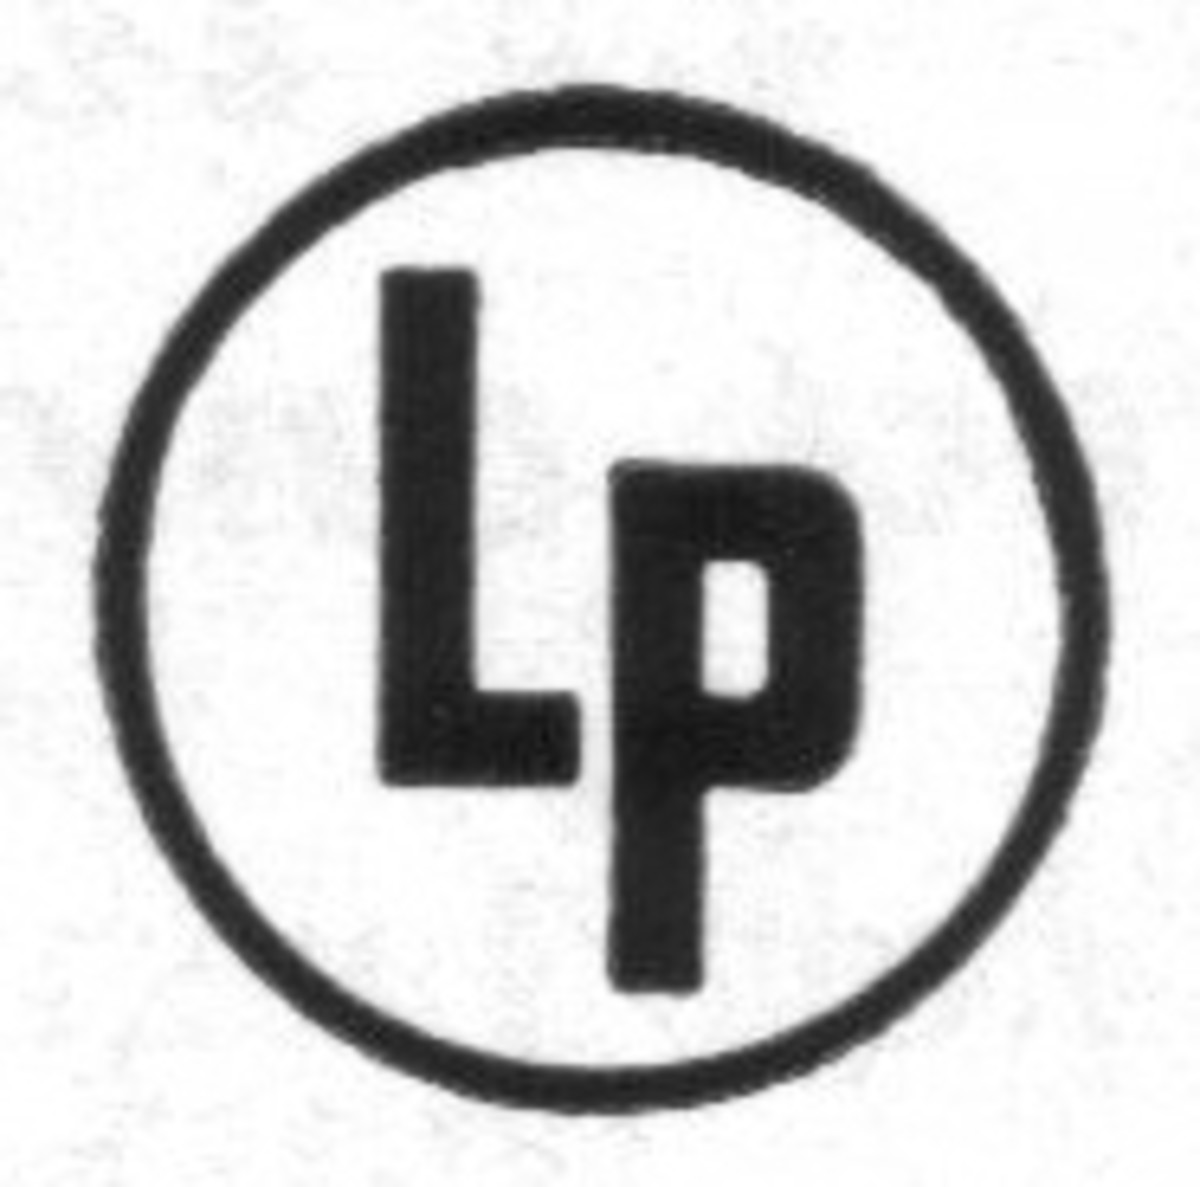 The LP logo